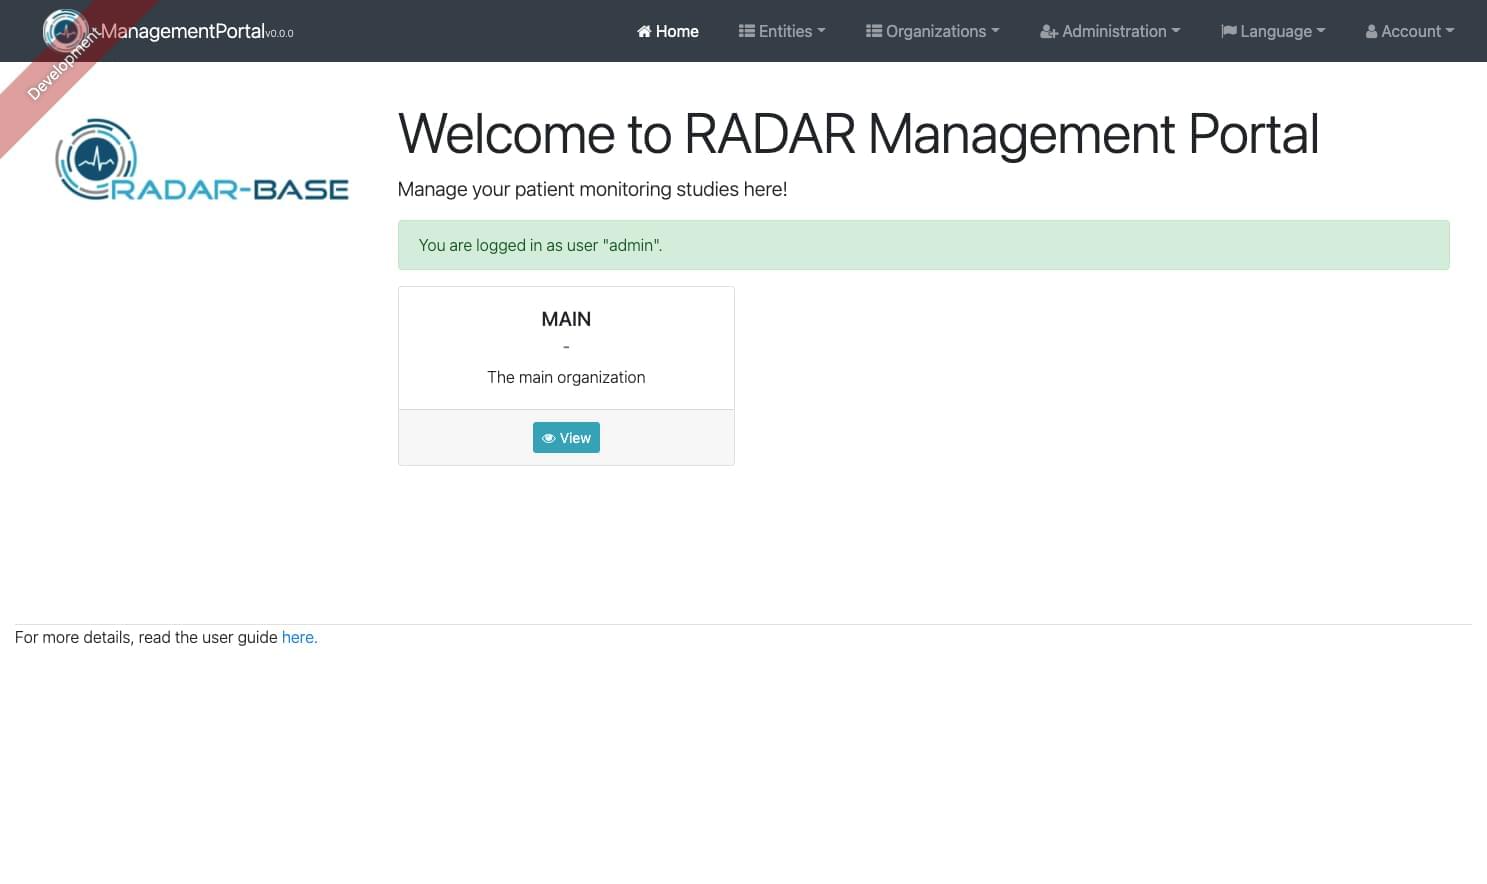 RADAR-base management portal 2.0